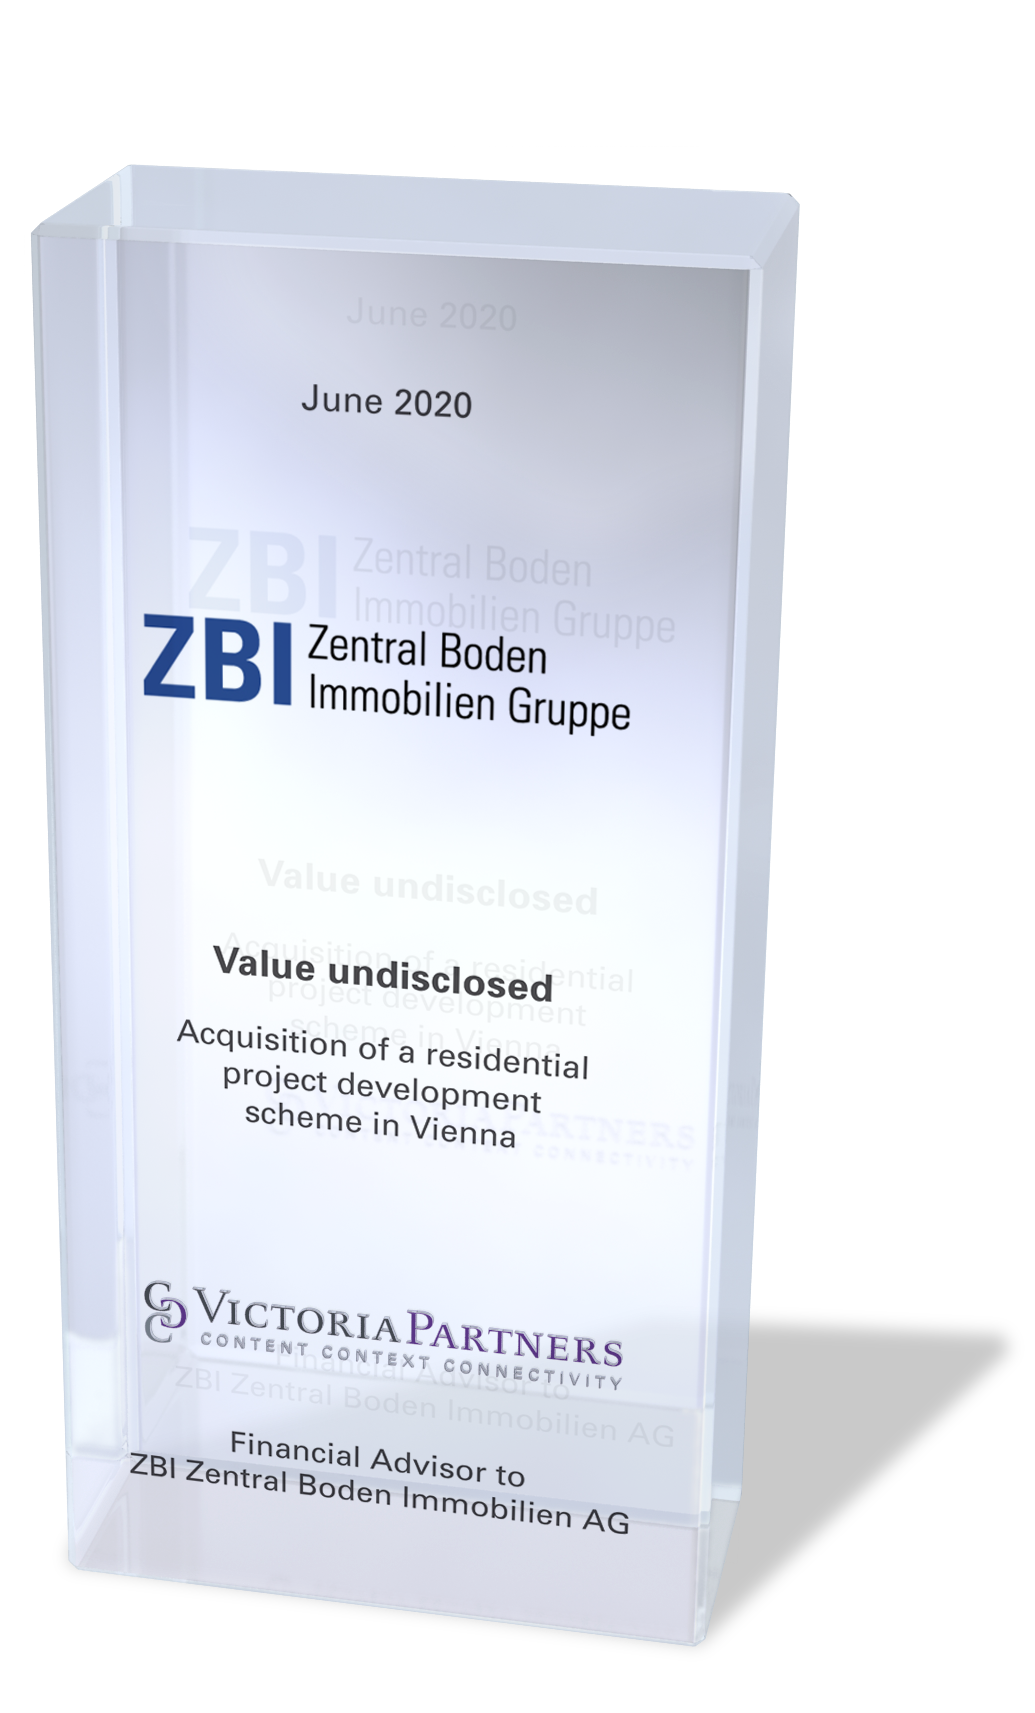 VICTORIAPARTNERS - Financial Advisor to ZBI Zentral Boden Immobilien AG - June 2020